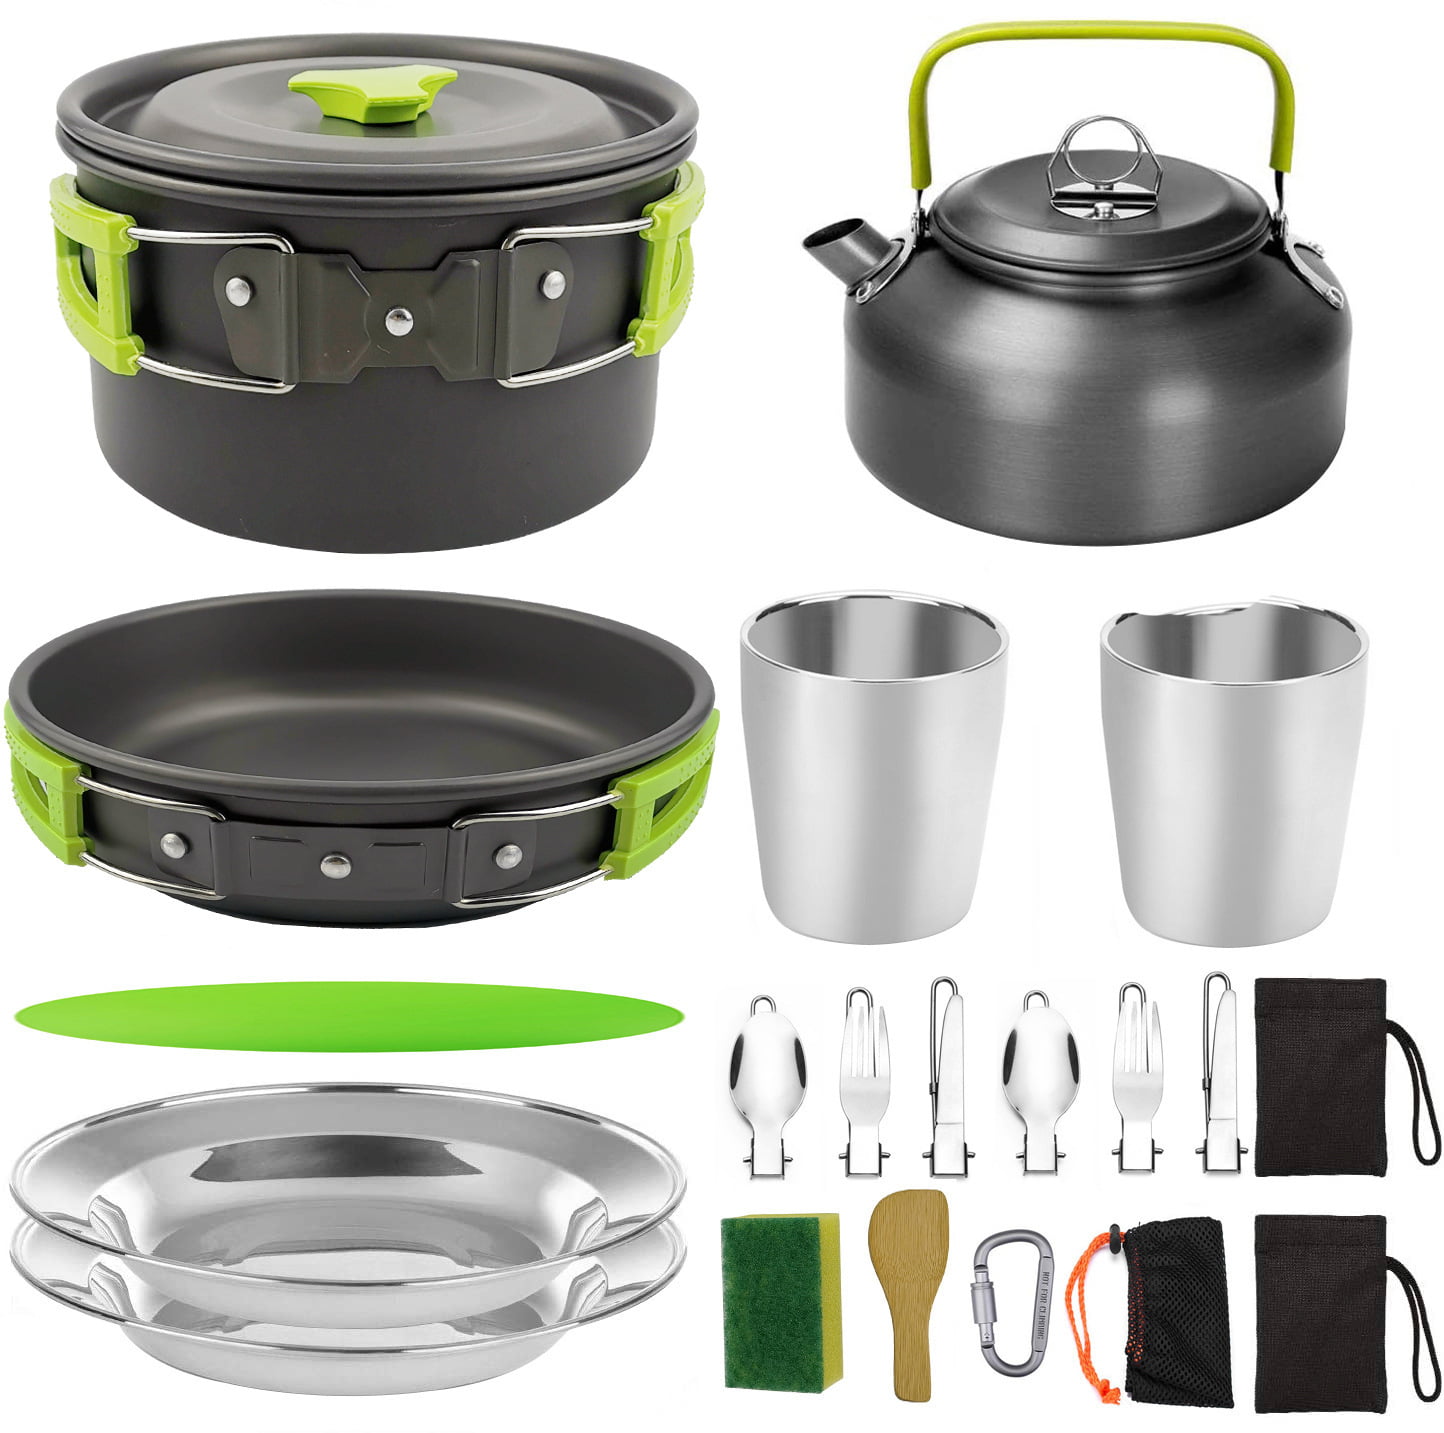 teapot set outdoor cooker portable camping picnic pot 2-3 people picnic stove 